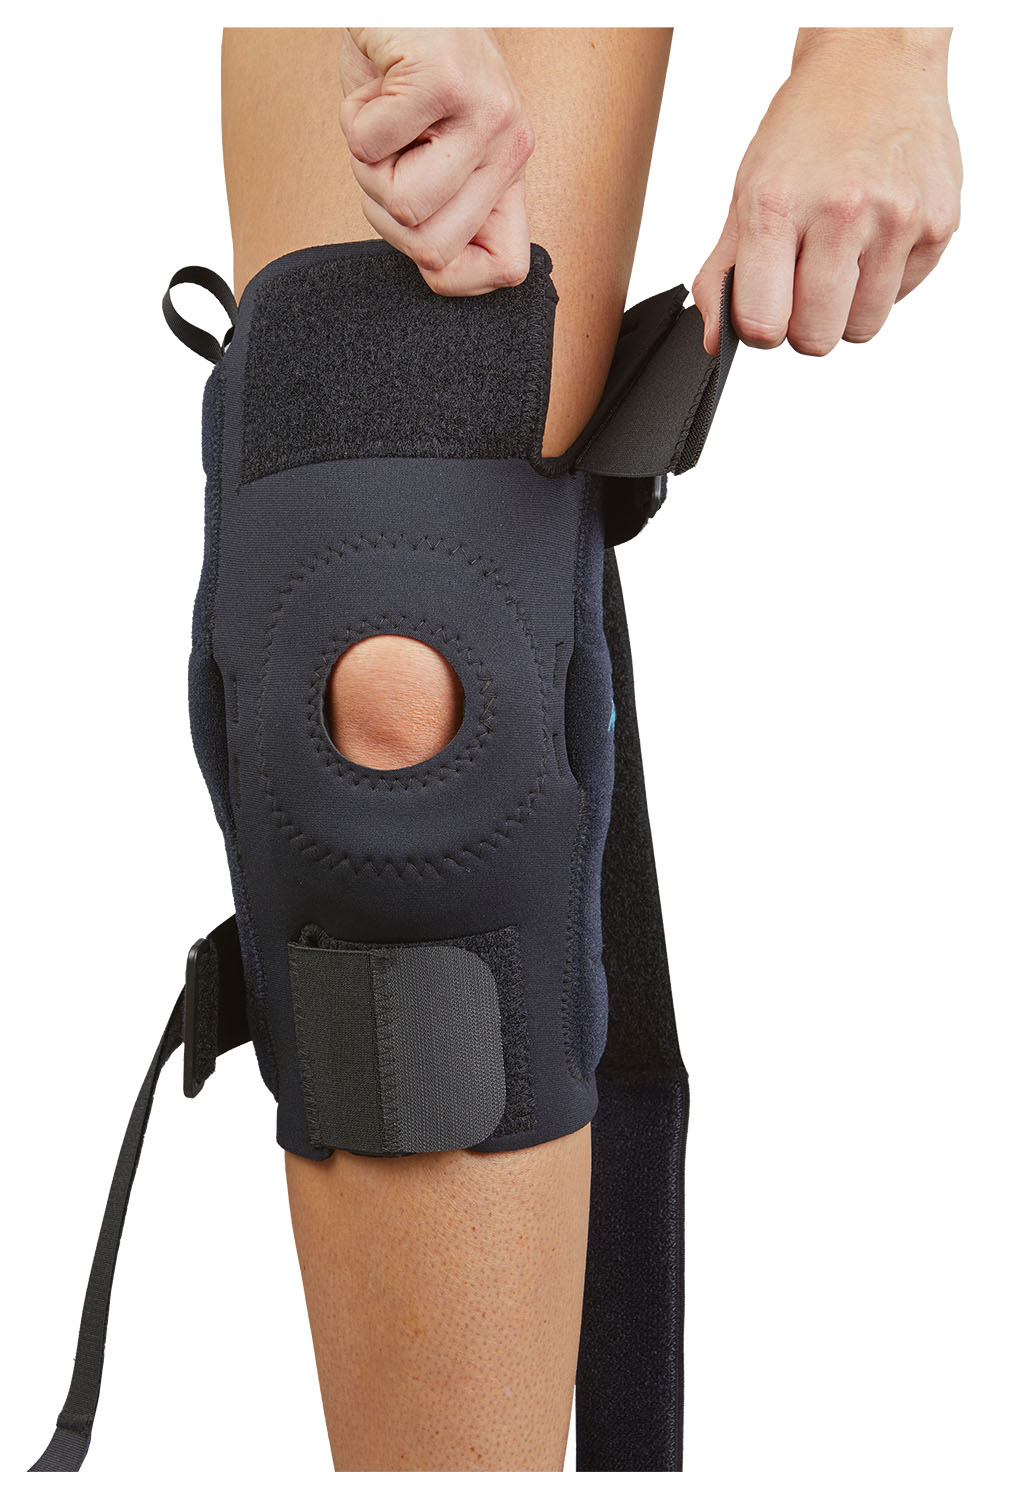 AKSTM Knee Support with Metal Hinges & Straps – Med Spec